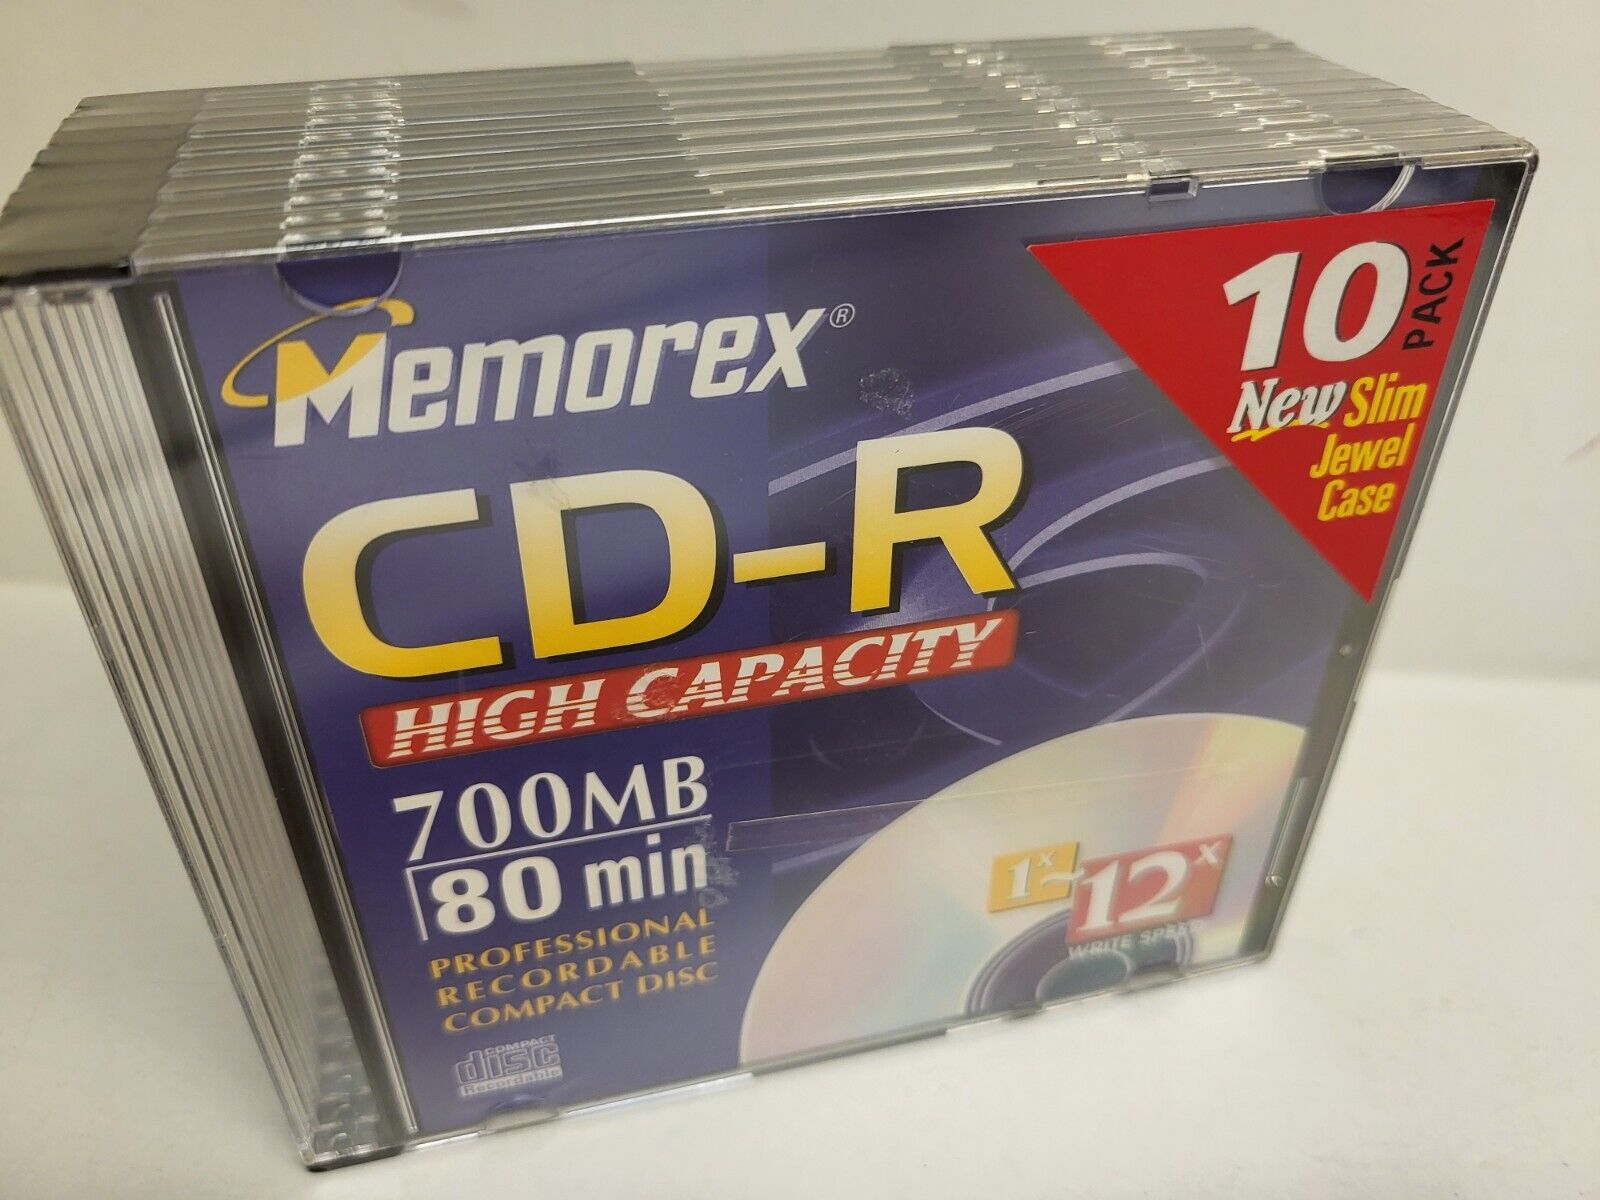 Memorex Recordable CD-R 700 mb 80 min 1x-12x Speed 10 Pack Vintage 2000